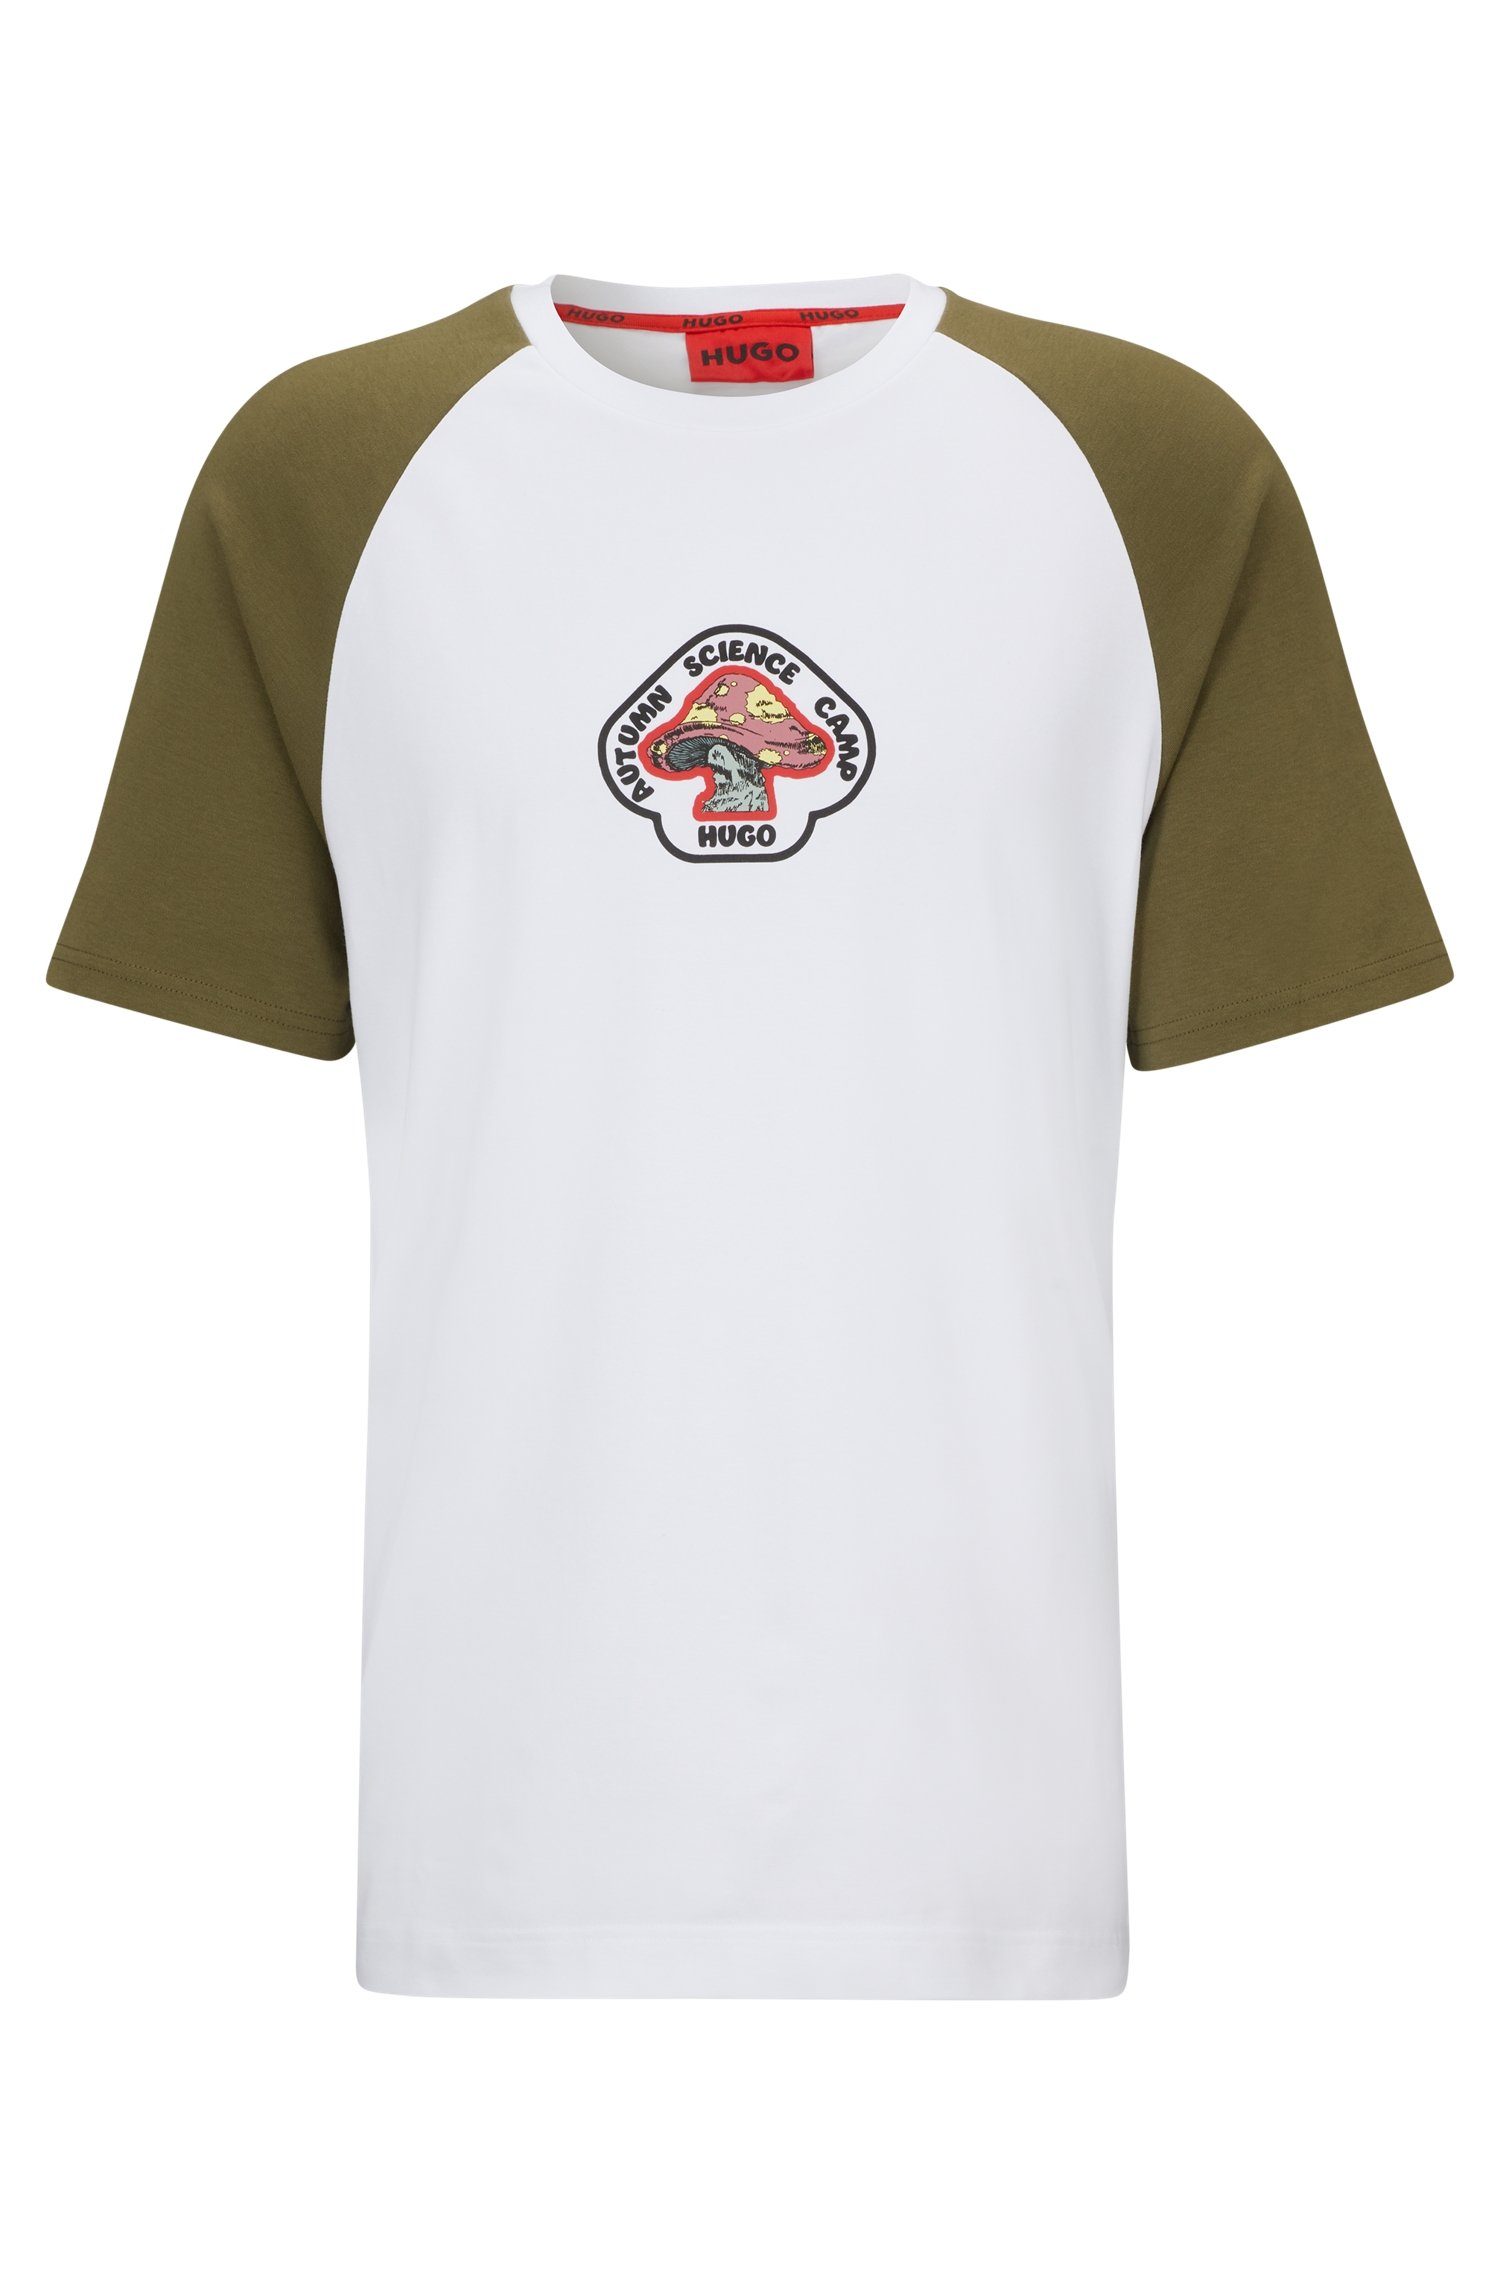 HUGO T-Shirt Logodruck speziellem Mushroom T-Shirt mit